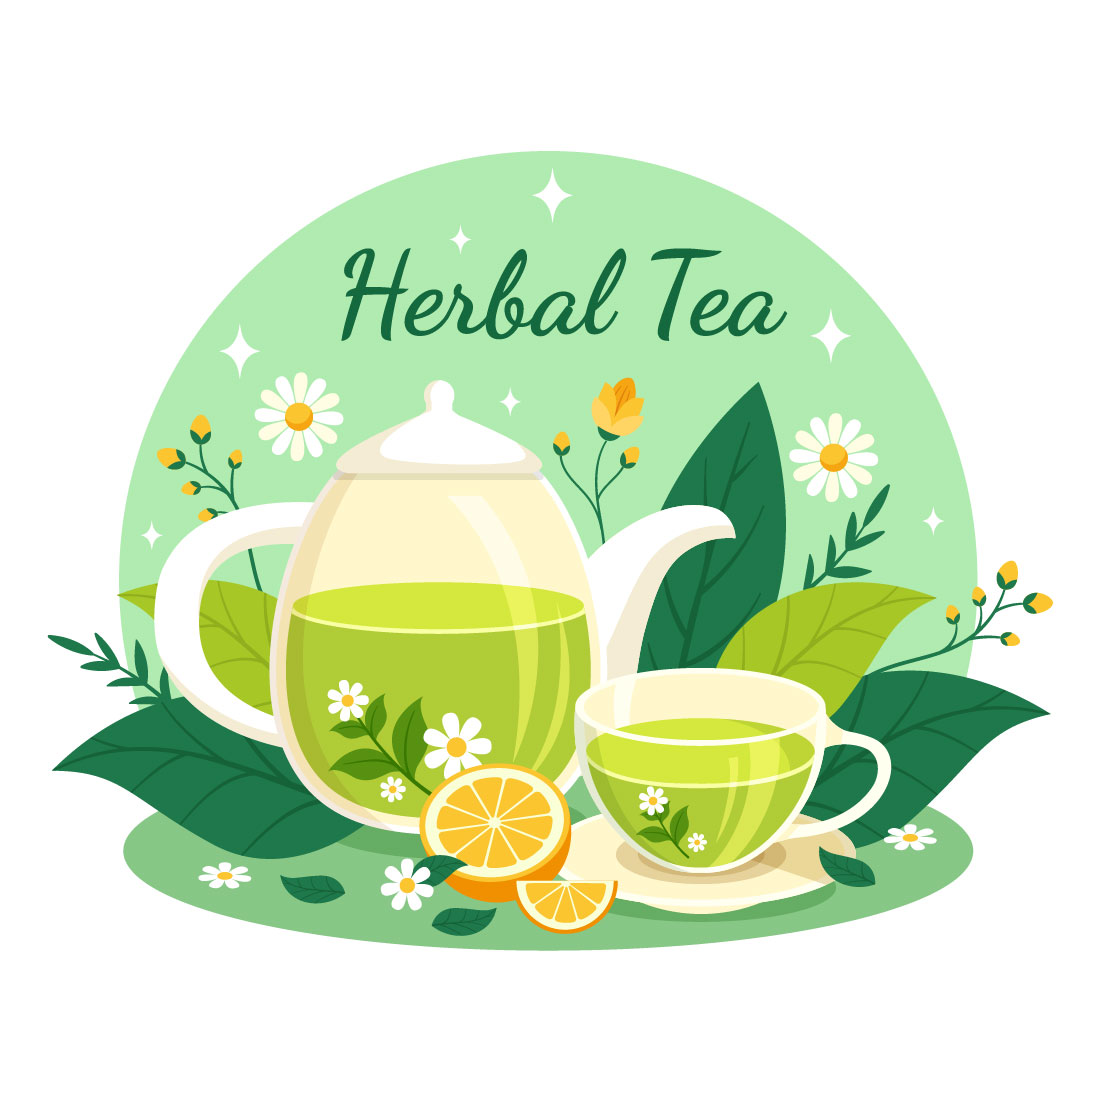 8 Herbal Tea Illustration cover image.